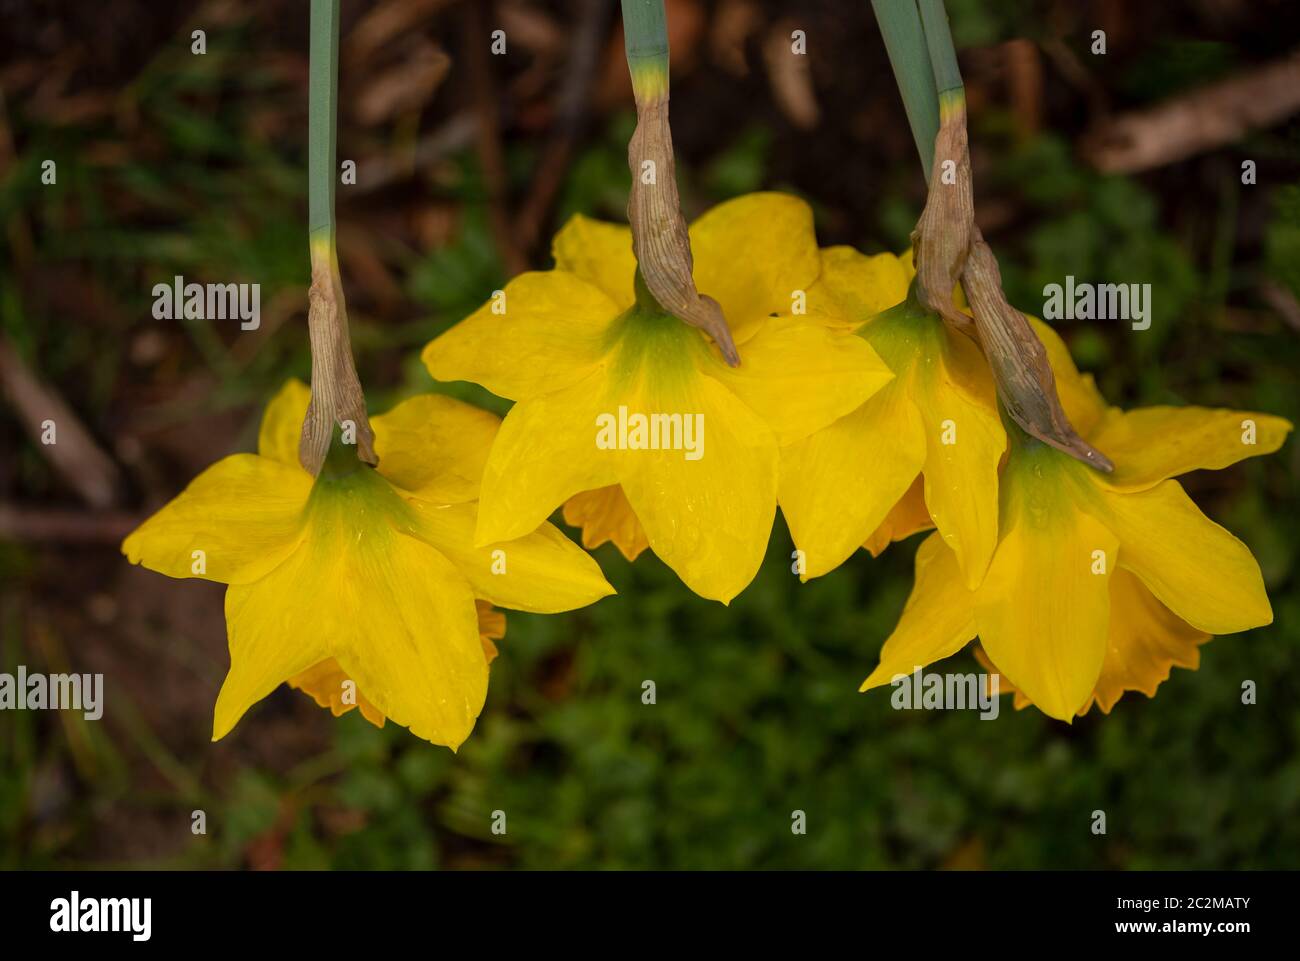 WA16865-00...WASHINGTON - Blumen blühen Anfang März im Washington Park Arboretum in Seattle. Stockfoto